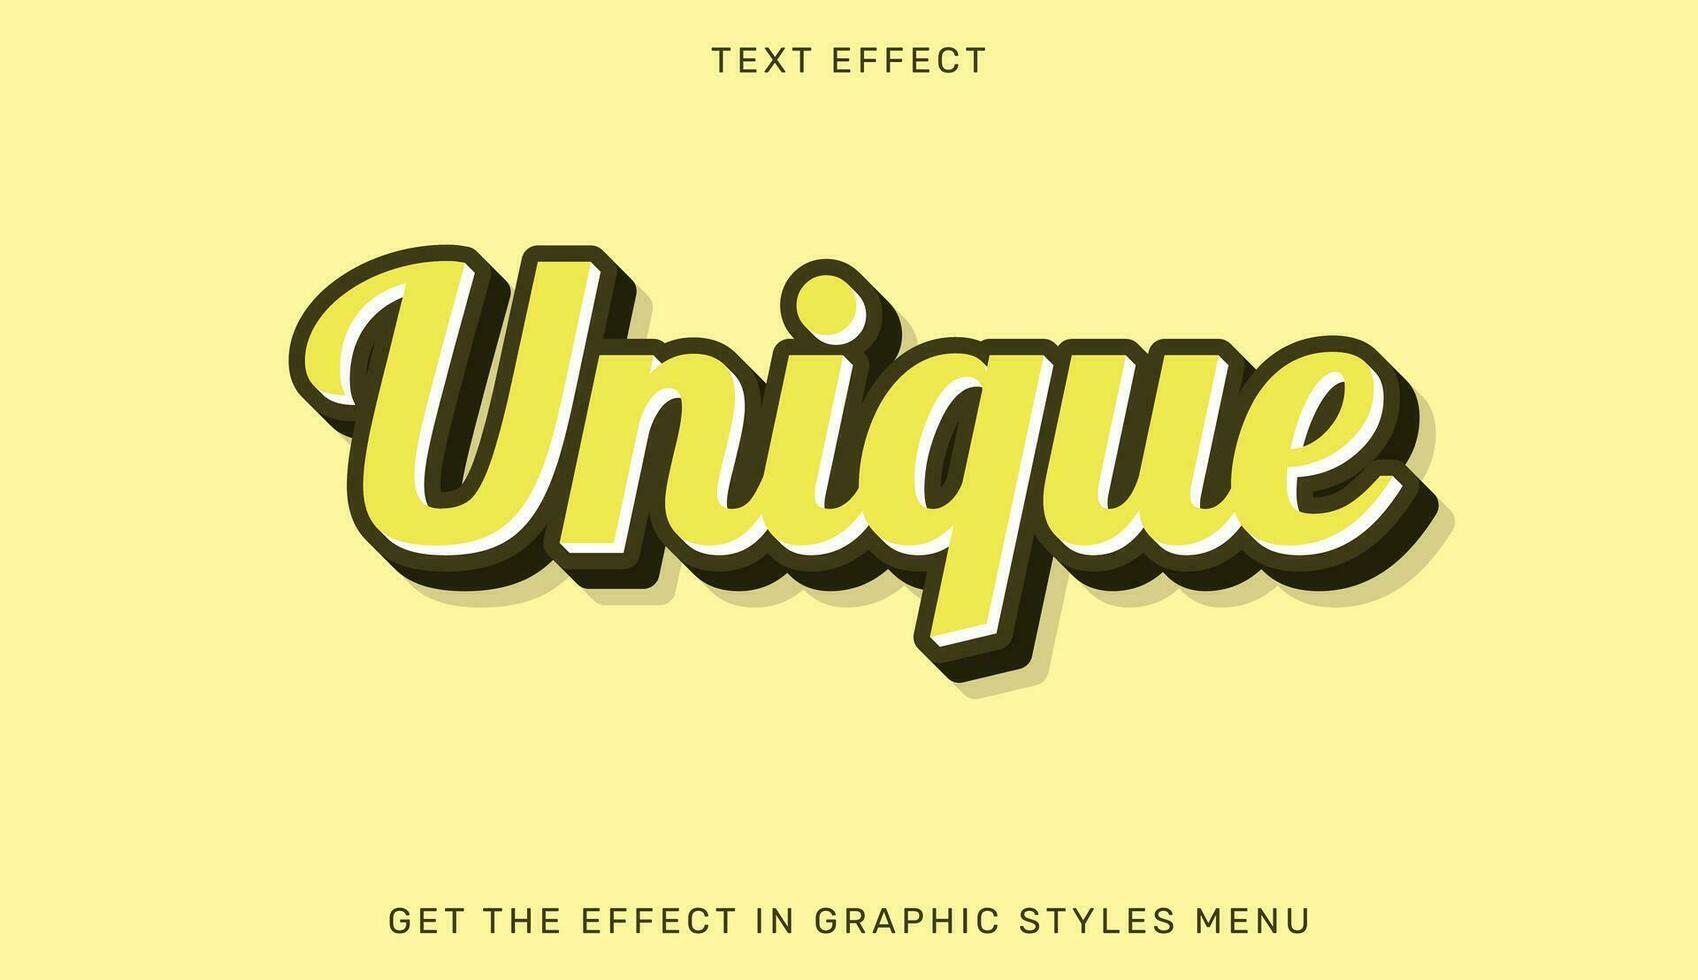 einzigartig editierbar Text bewirken im 3d Stil. Text Emblem zum Werbung, Marke, Geschäft Logo vektor